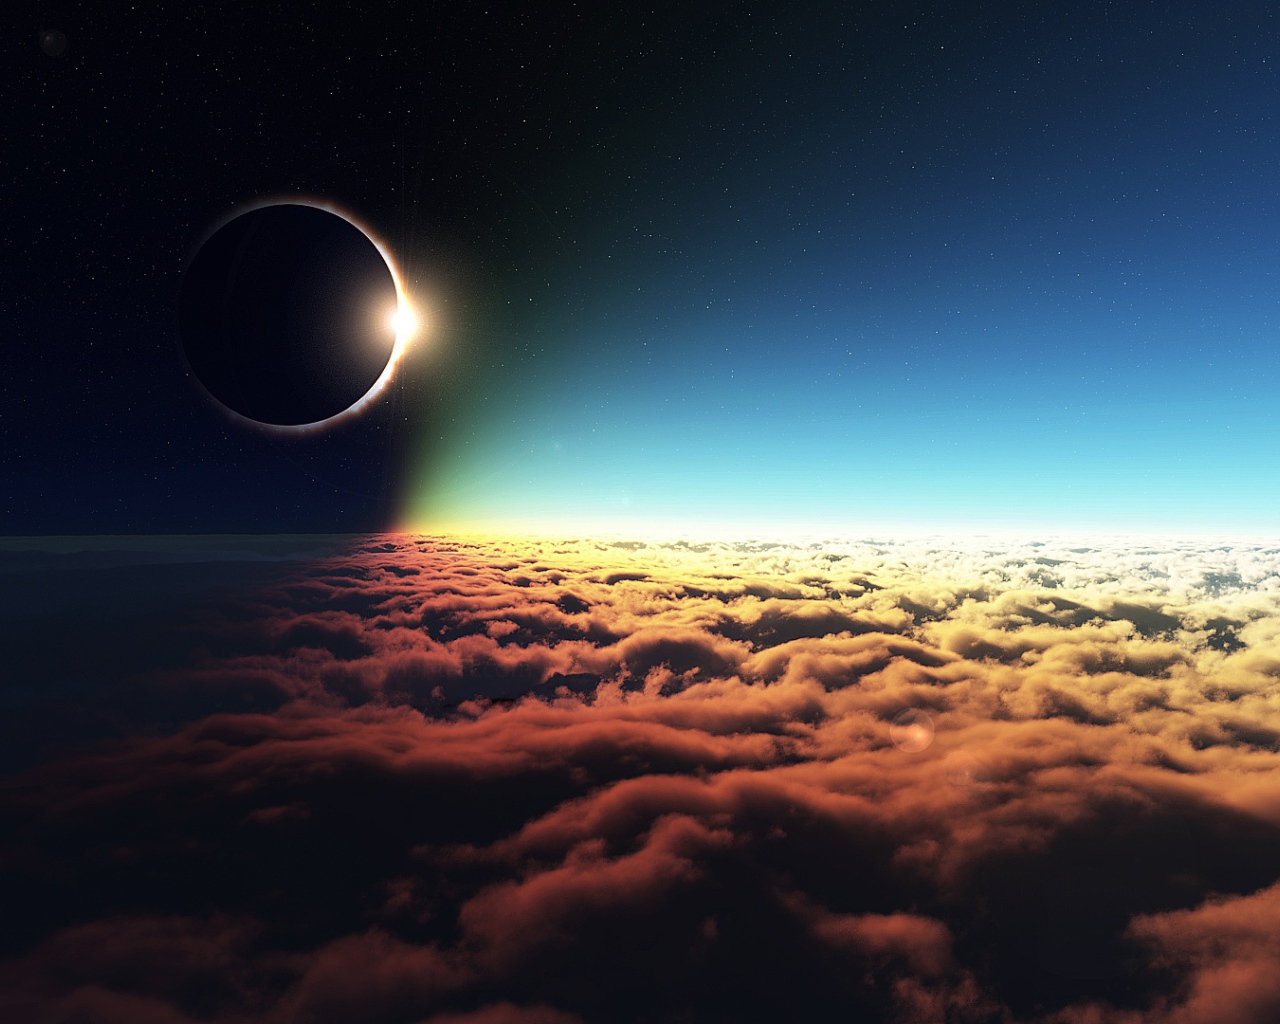 Eclipse altitude